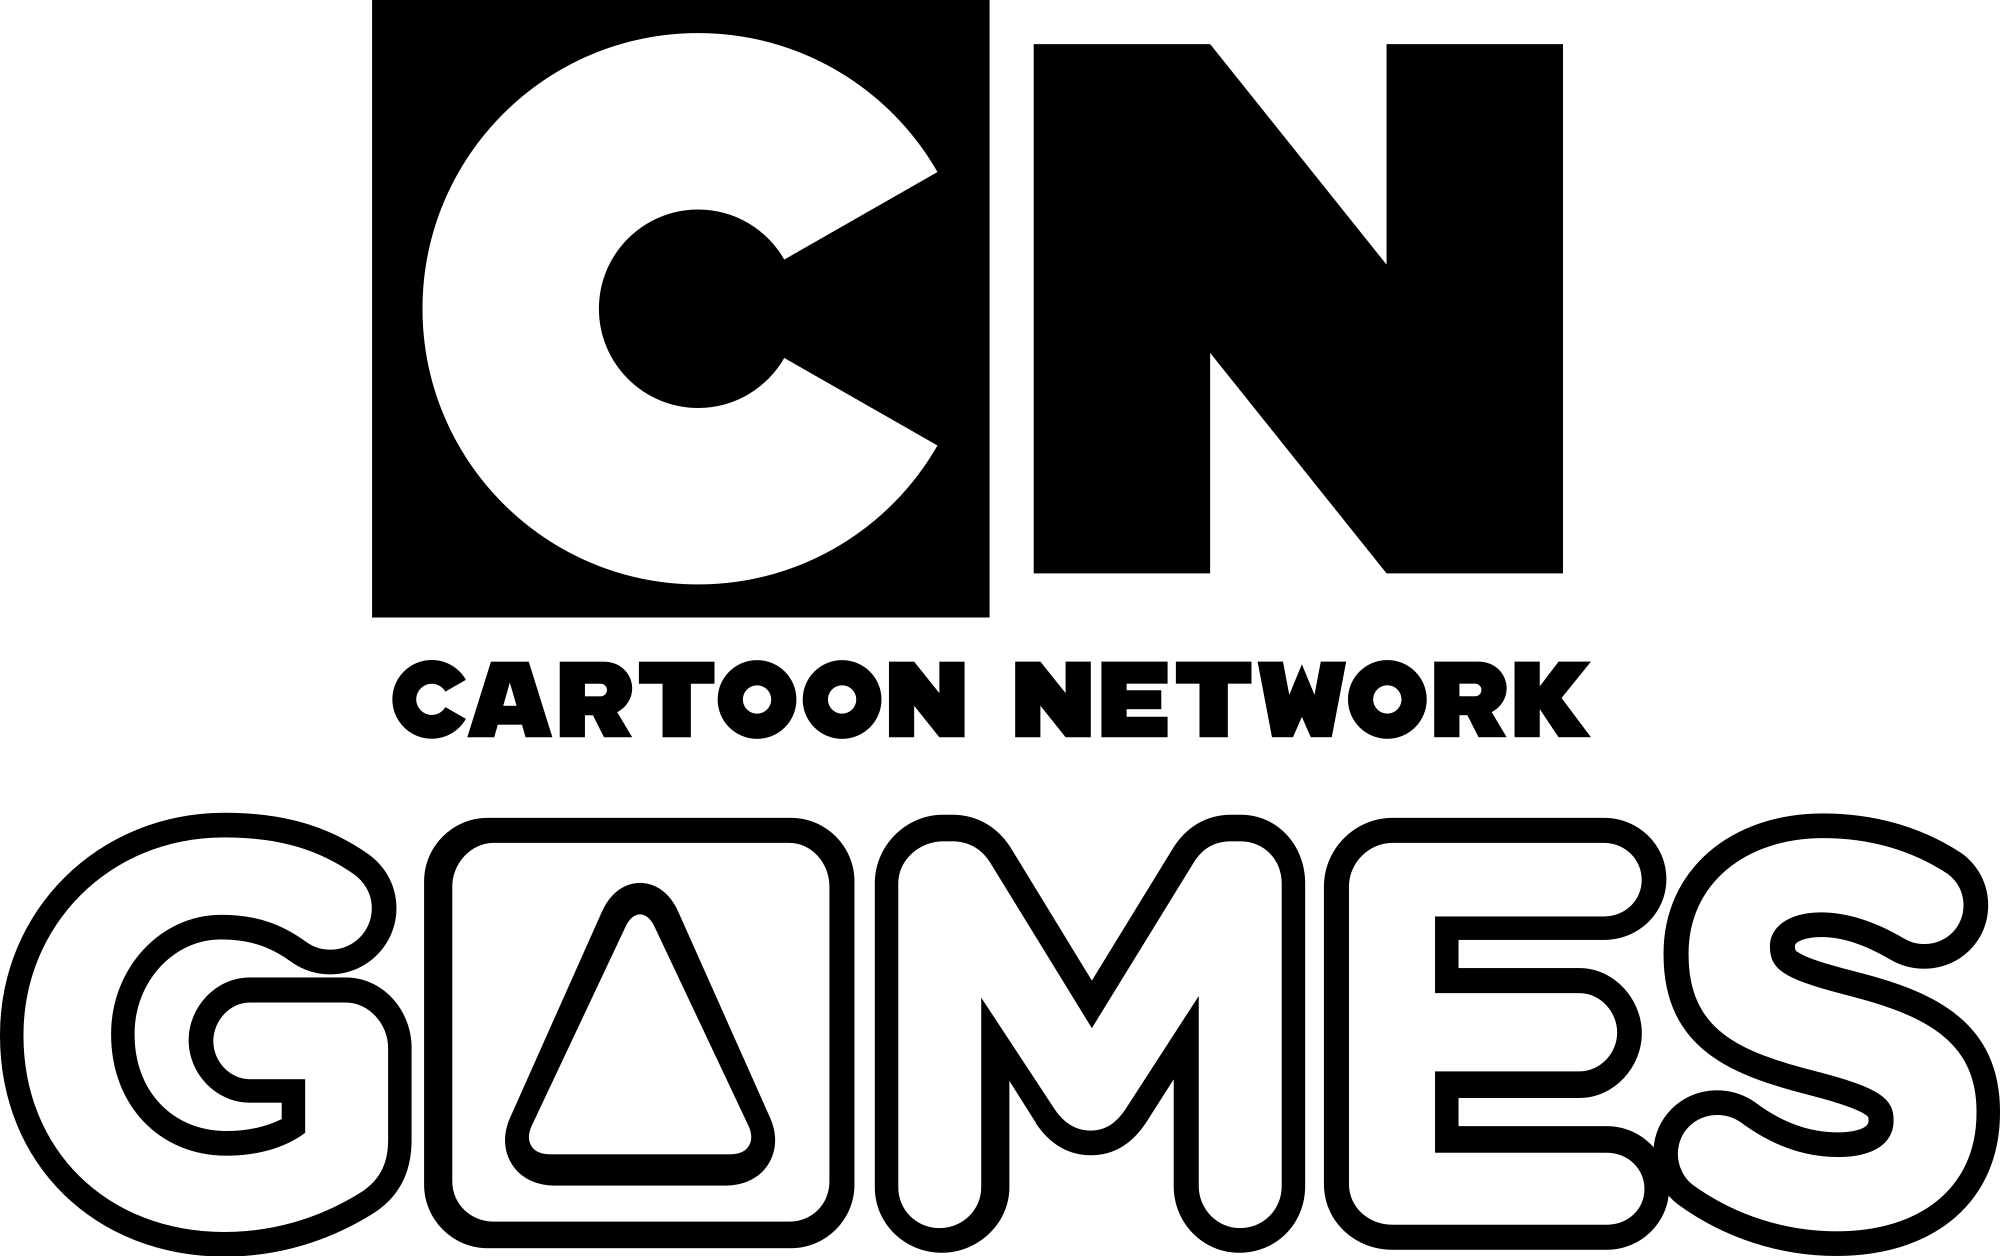 Cartoon network türkiye. Картун нетворк. Картун нетворк игры. CN cartoon Network игры. Картун нетворк логотип.